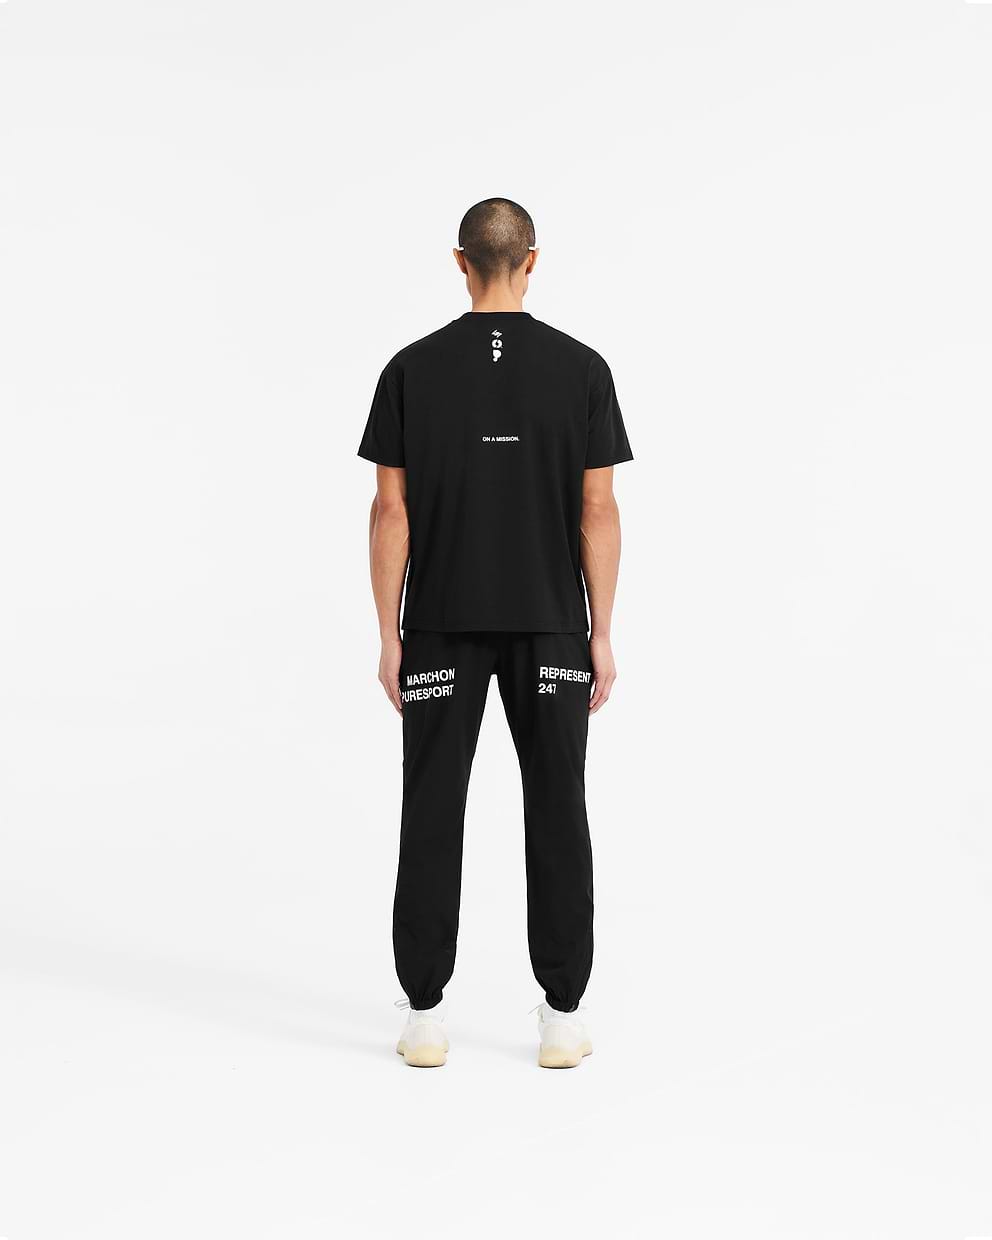 247 Marchon Puresport T-Shirt - Black